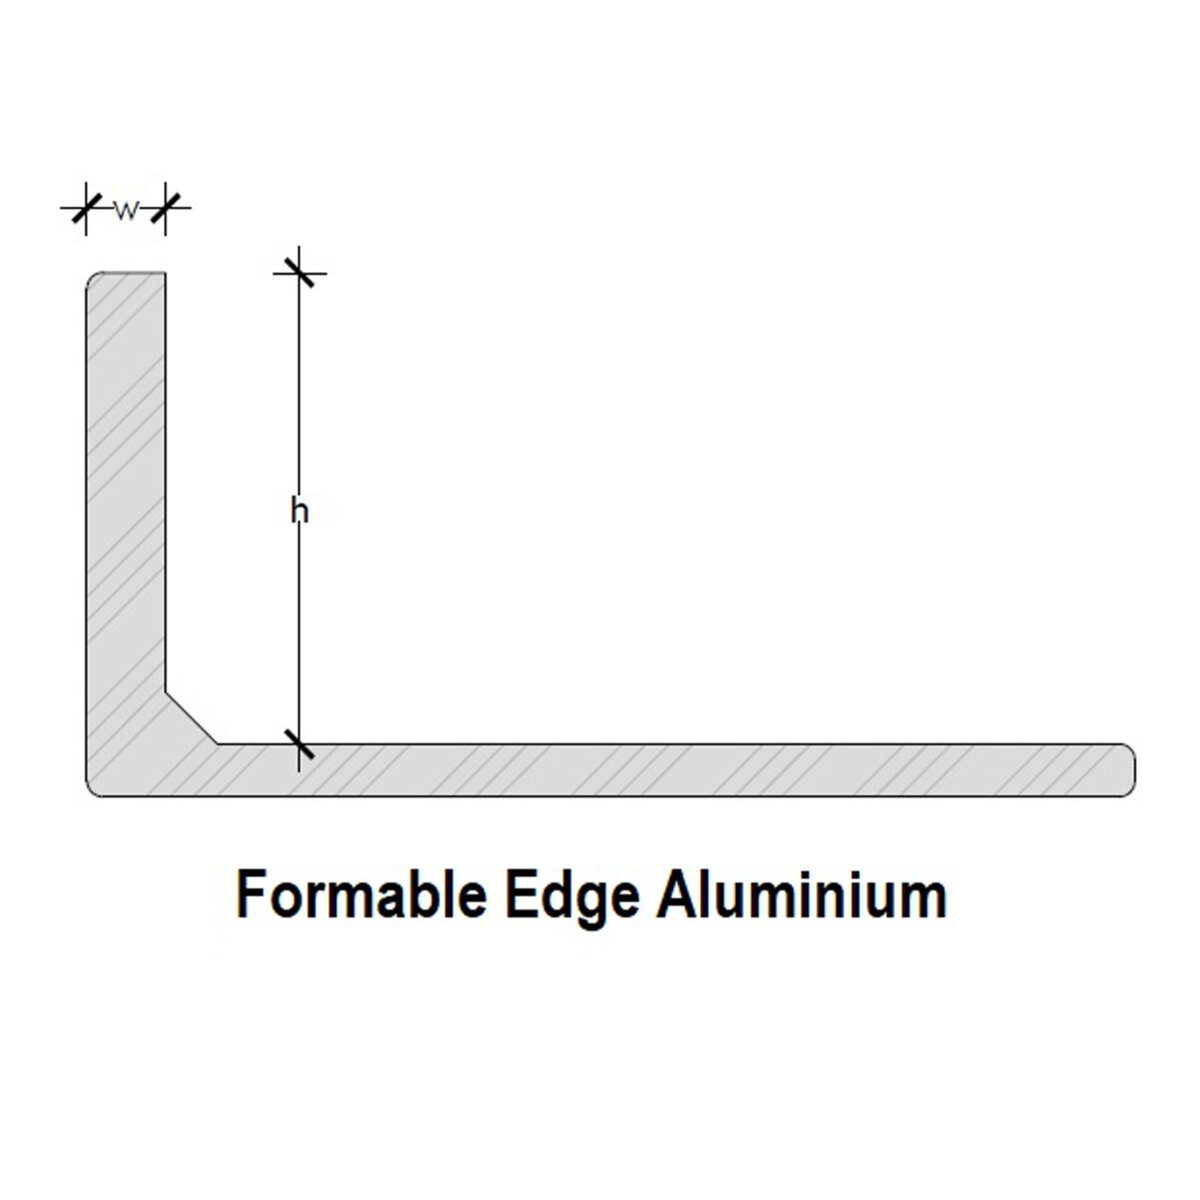 3 Sure Strip Formable Edge Aluminium 12mm_Stiles_TechDrawing_Image